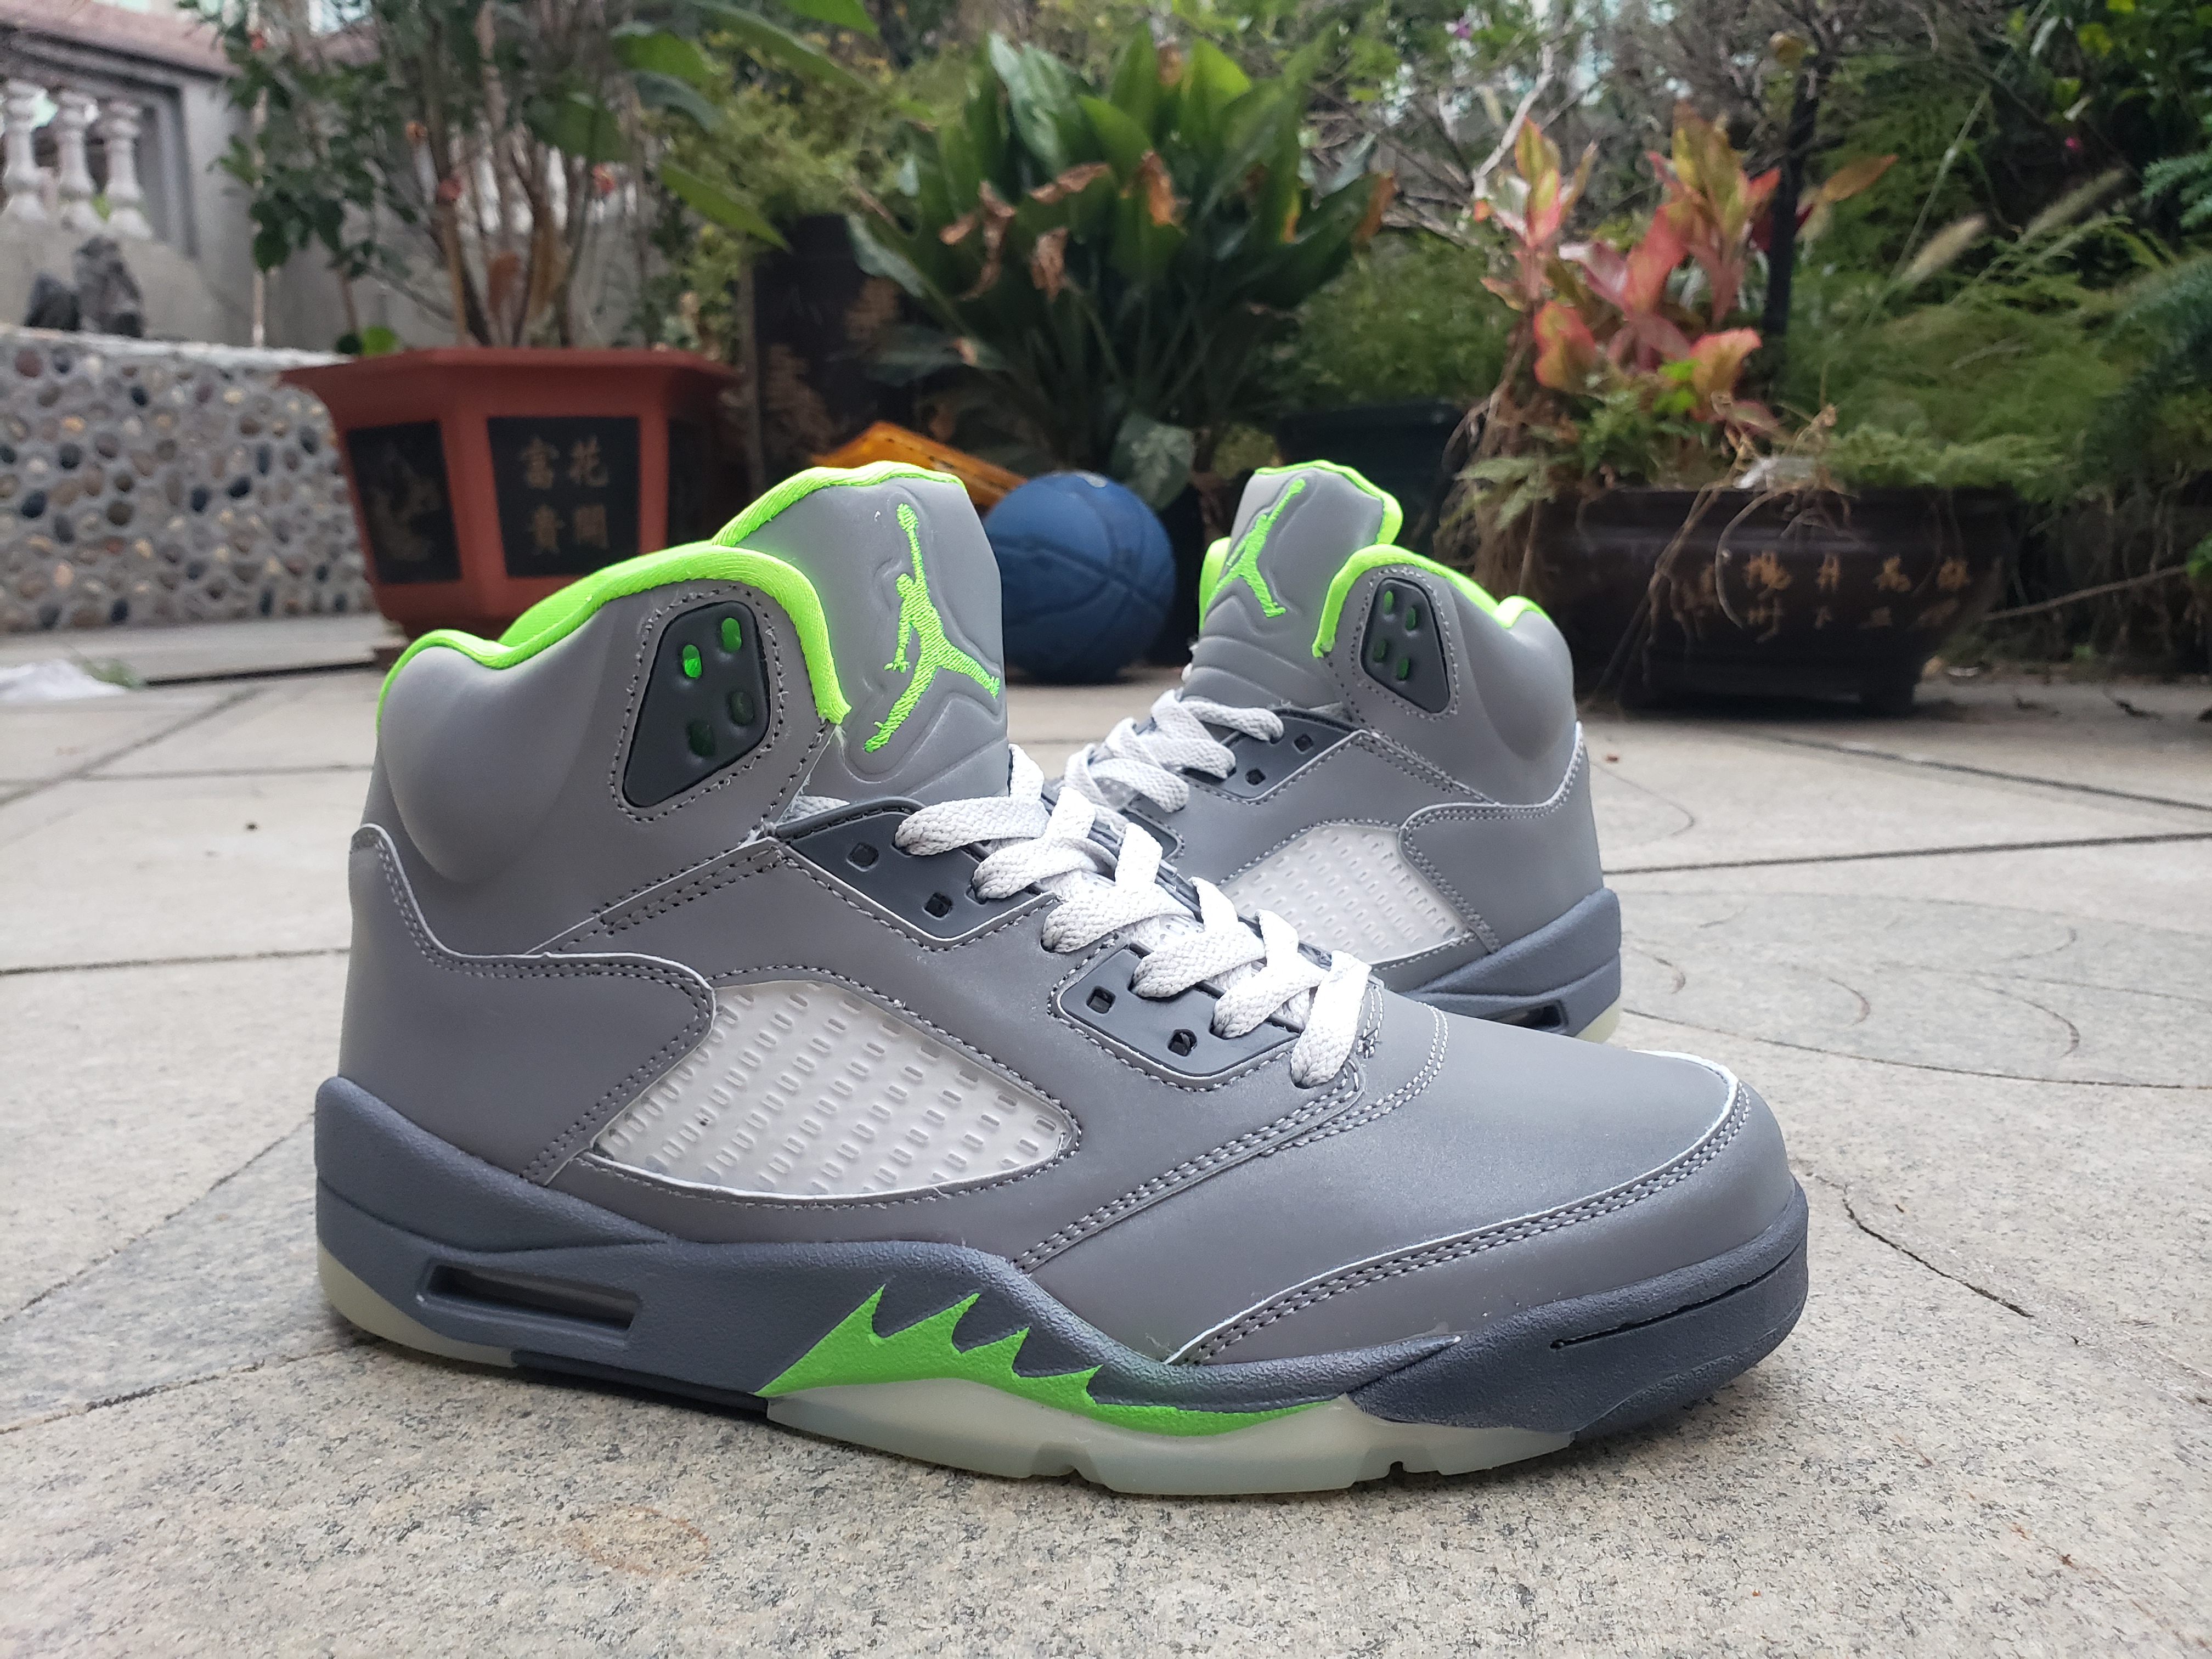 New Air Jordan 5 Cool Grey Green Shoes